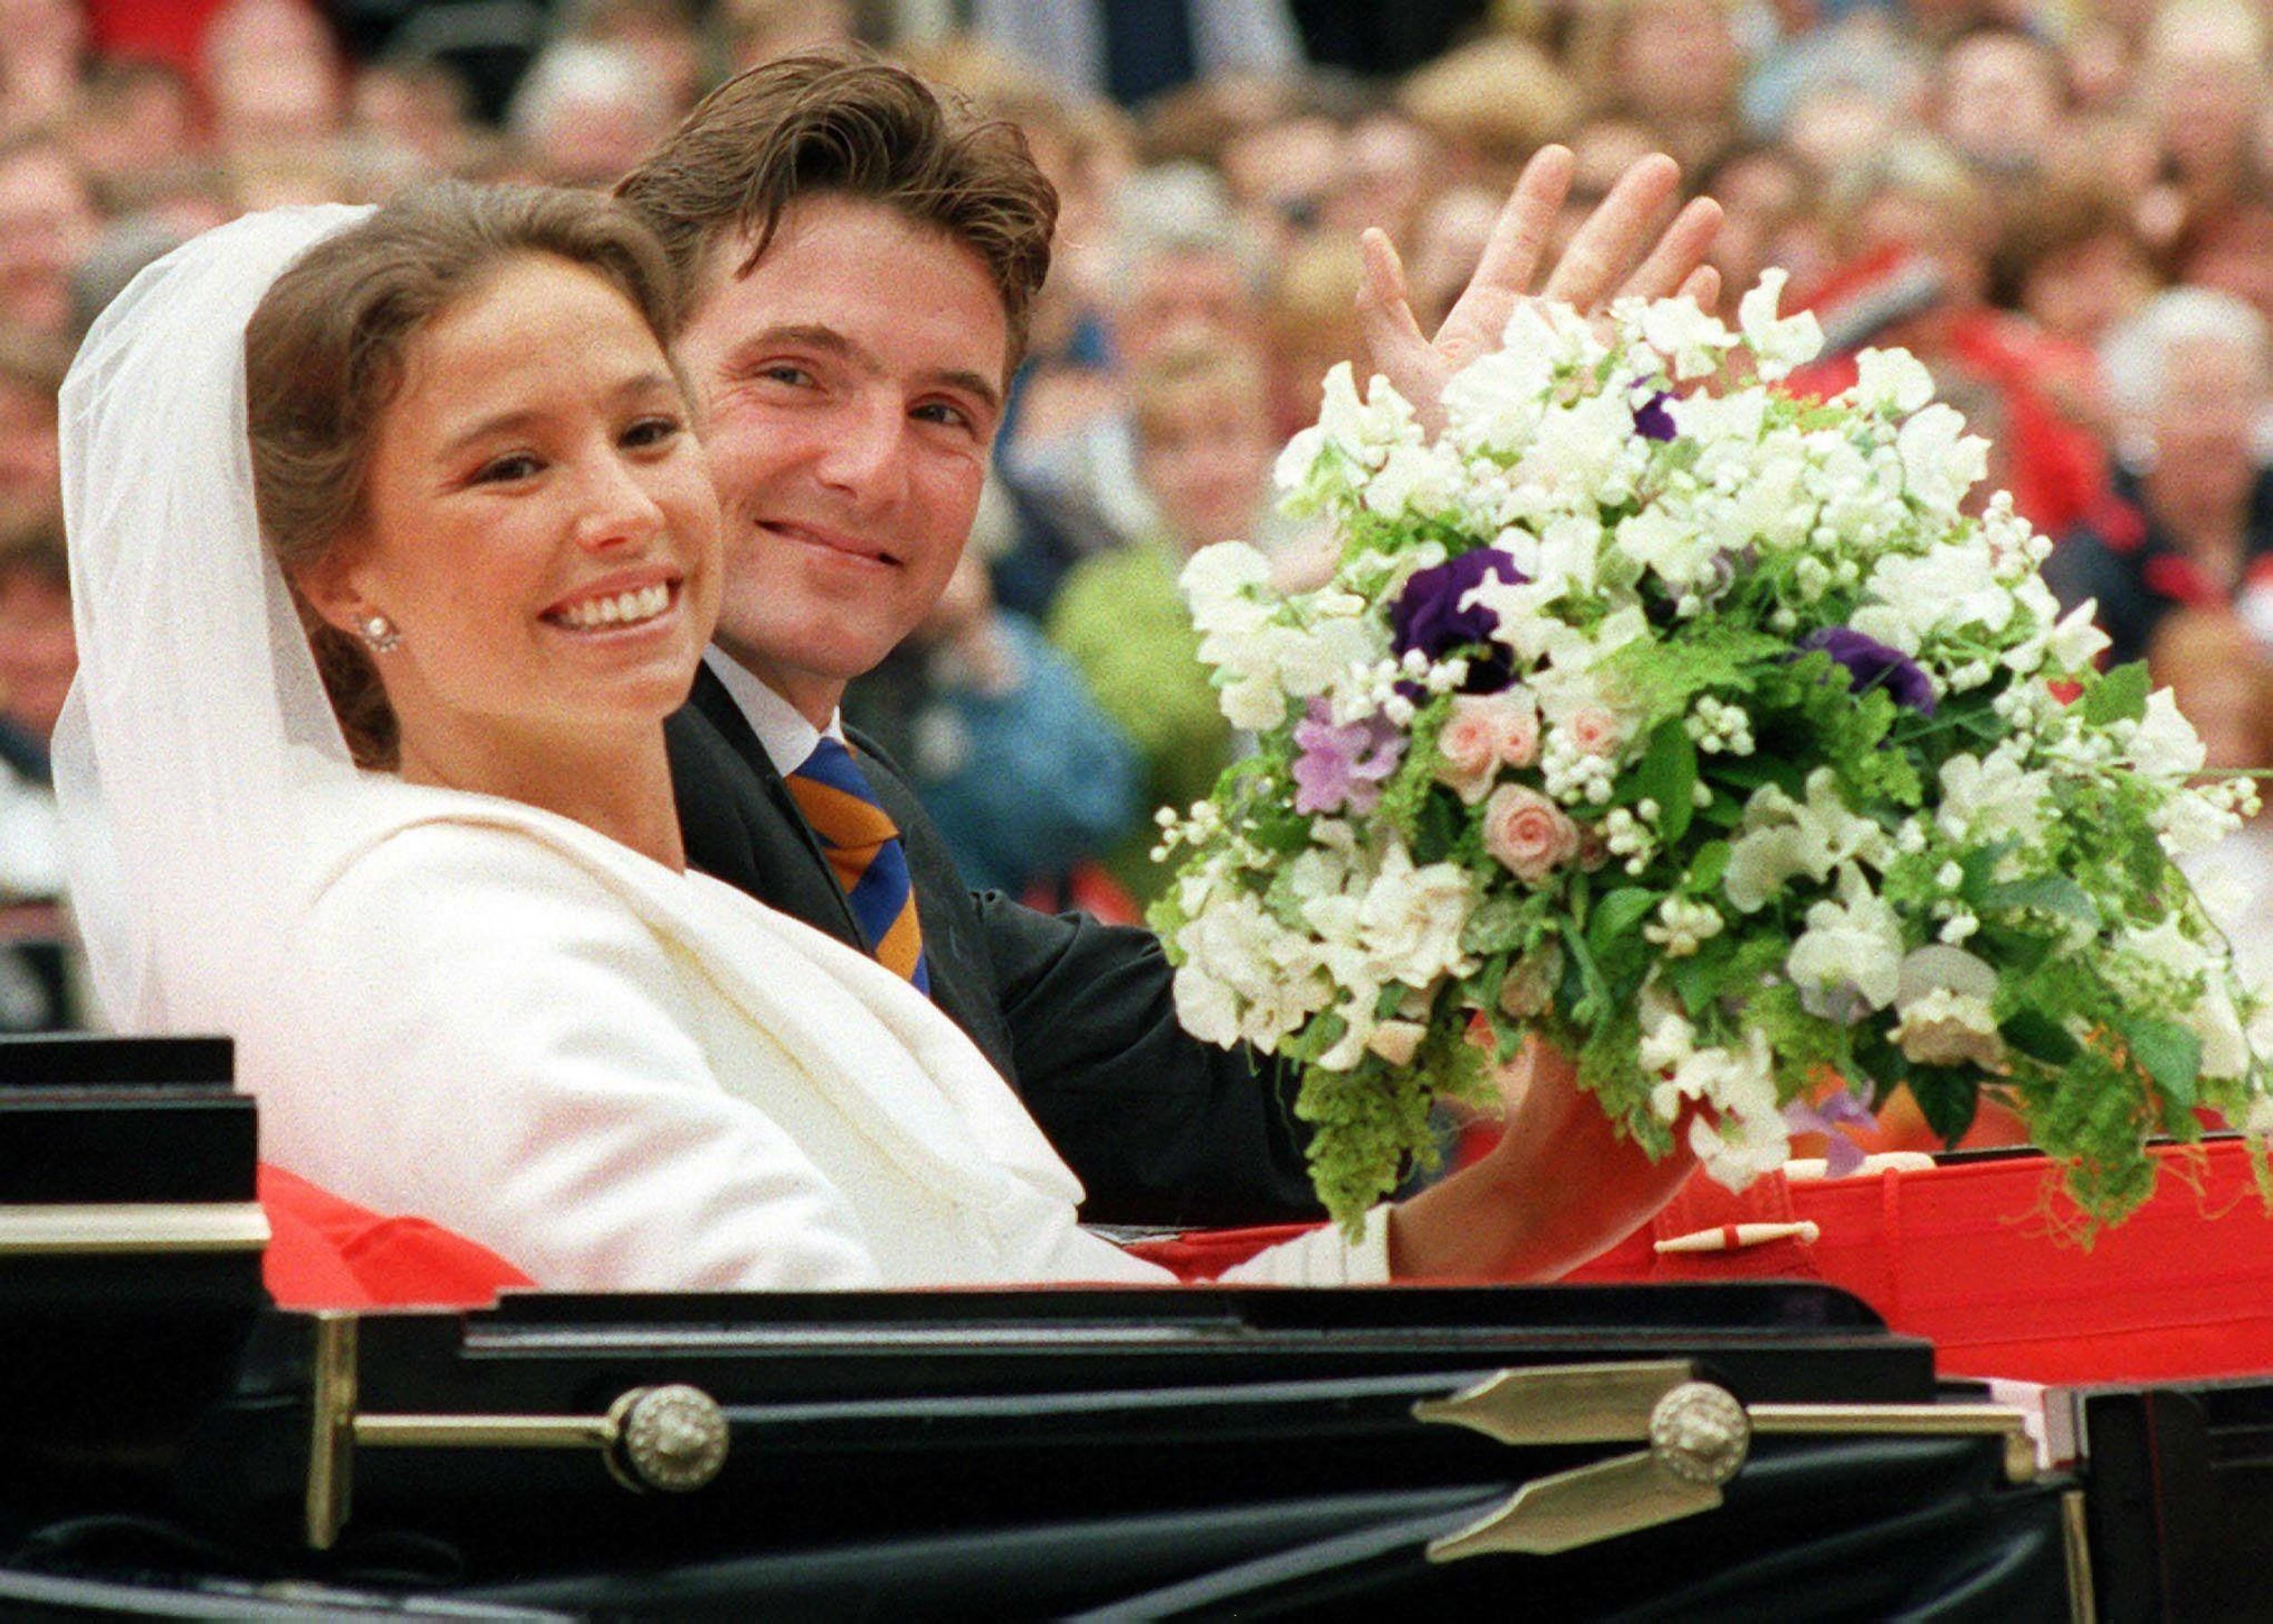 Maurits en Marilène trouwen op 29 mei 1998 in Apeldoorn.